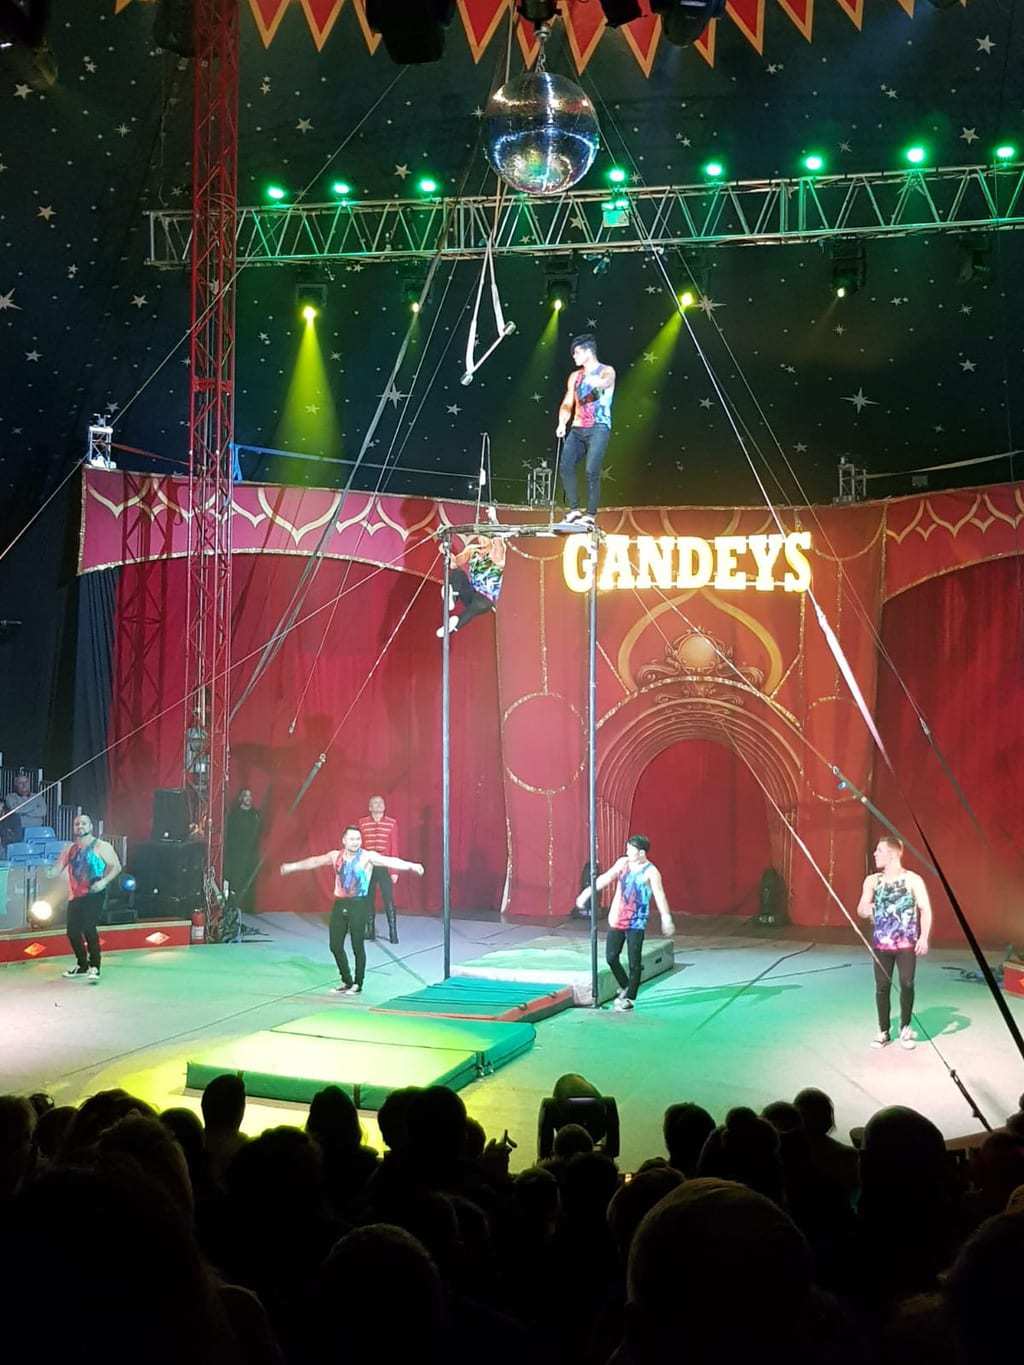 Review of Gandeys Circus - Unbelievable